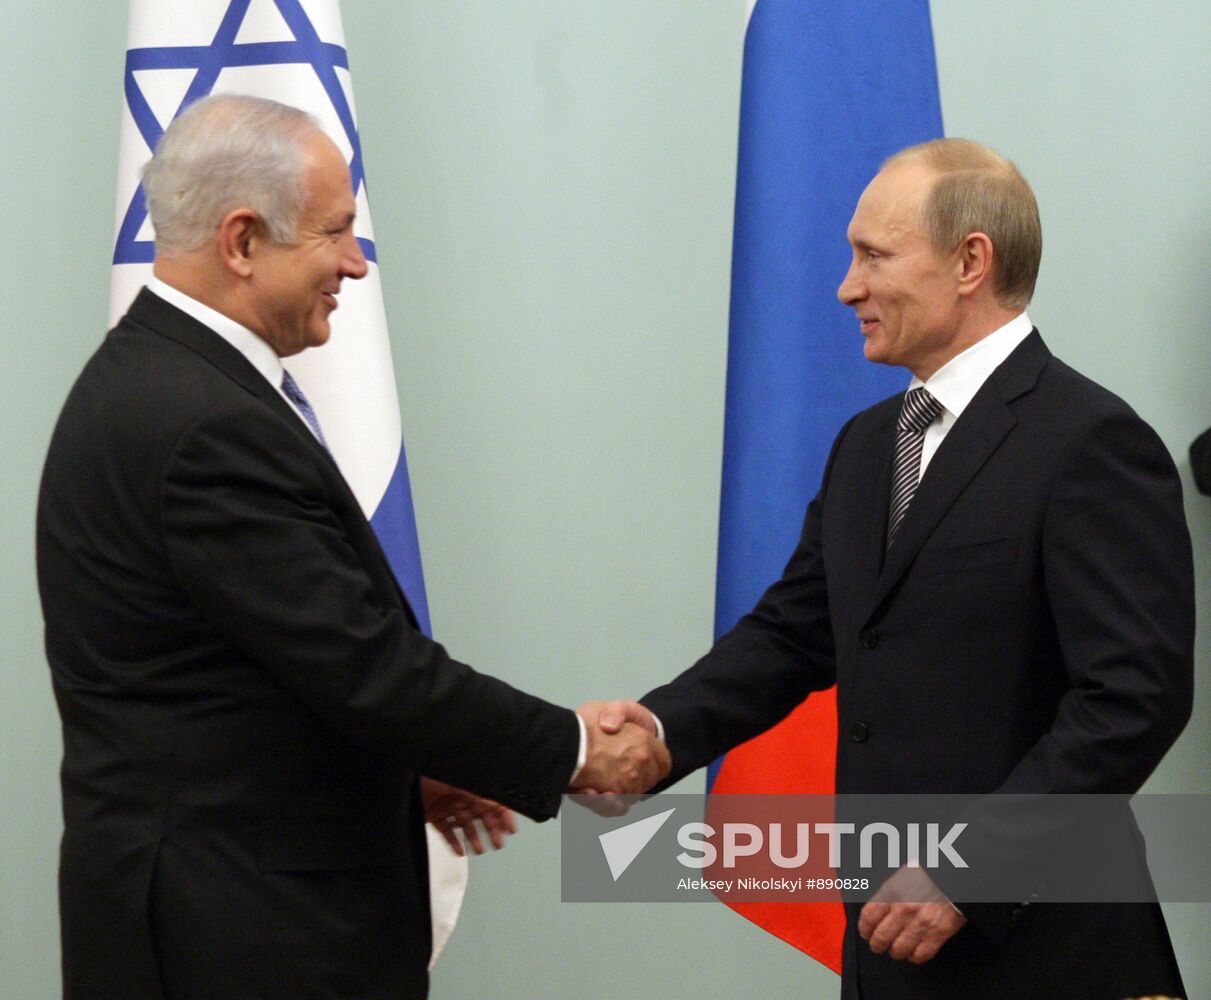 Vladimir Putin meets with Benjamin Netanyahu